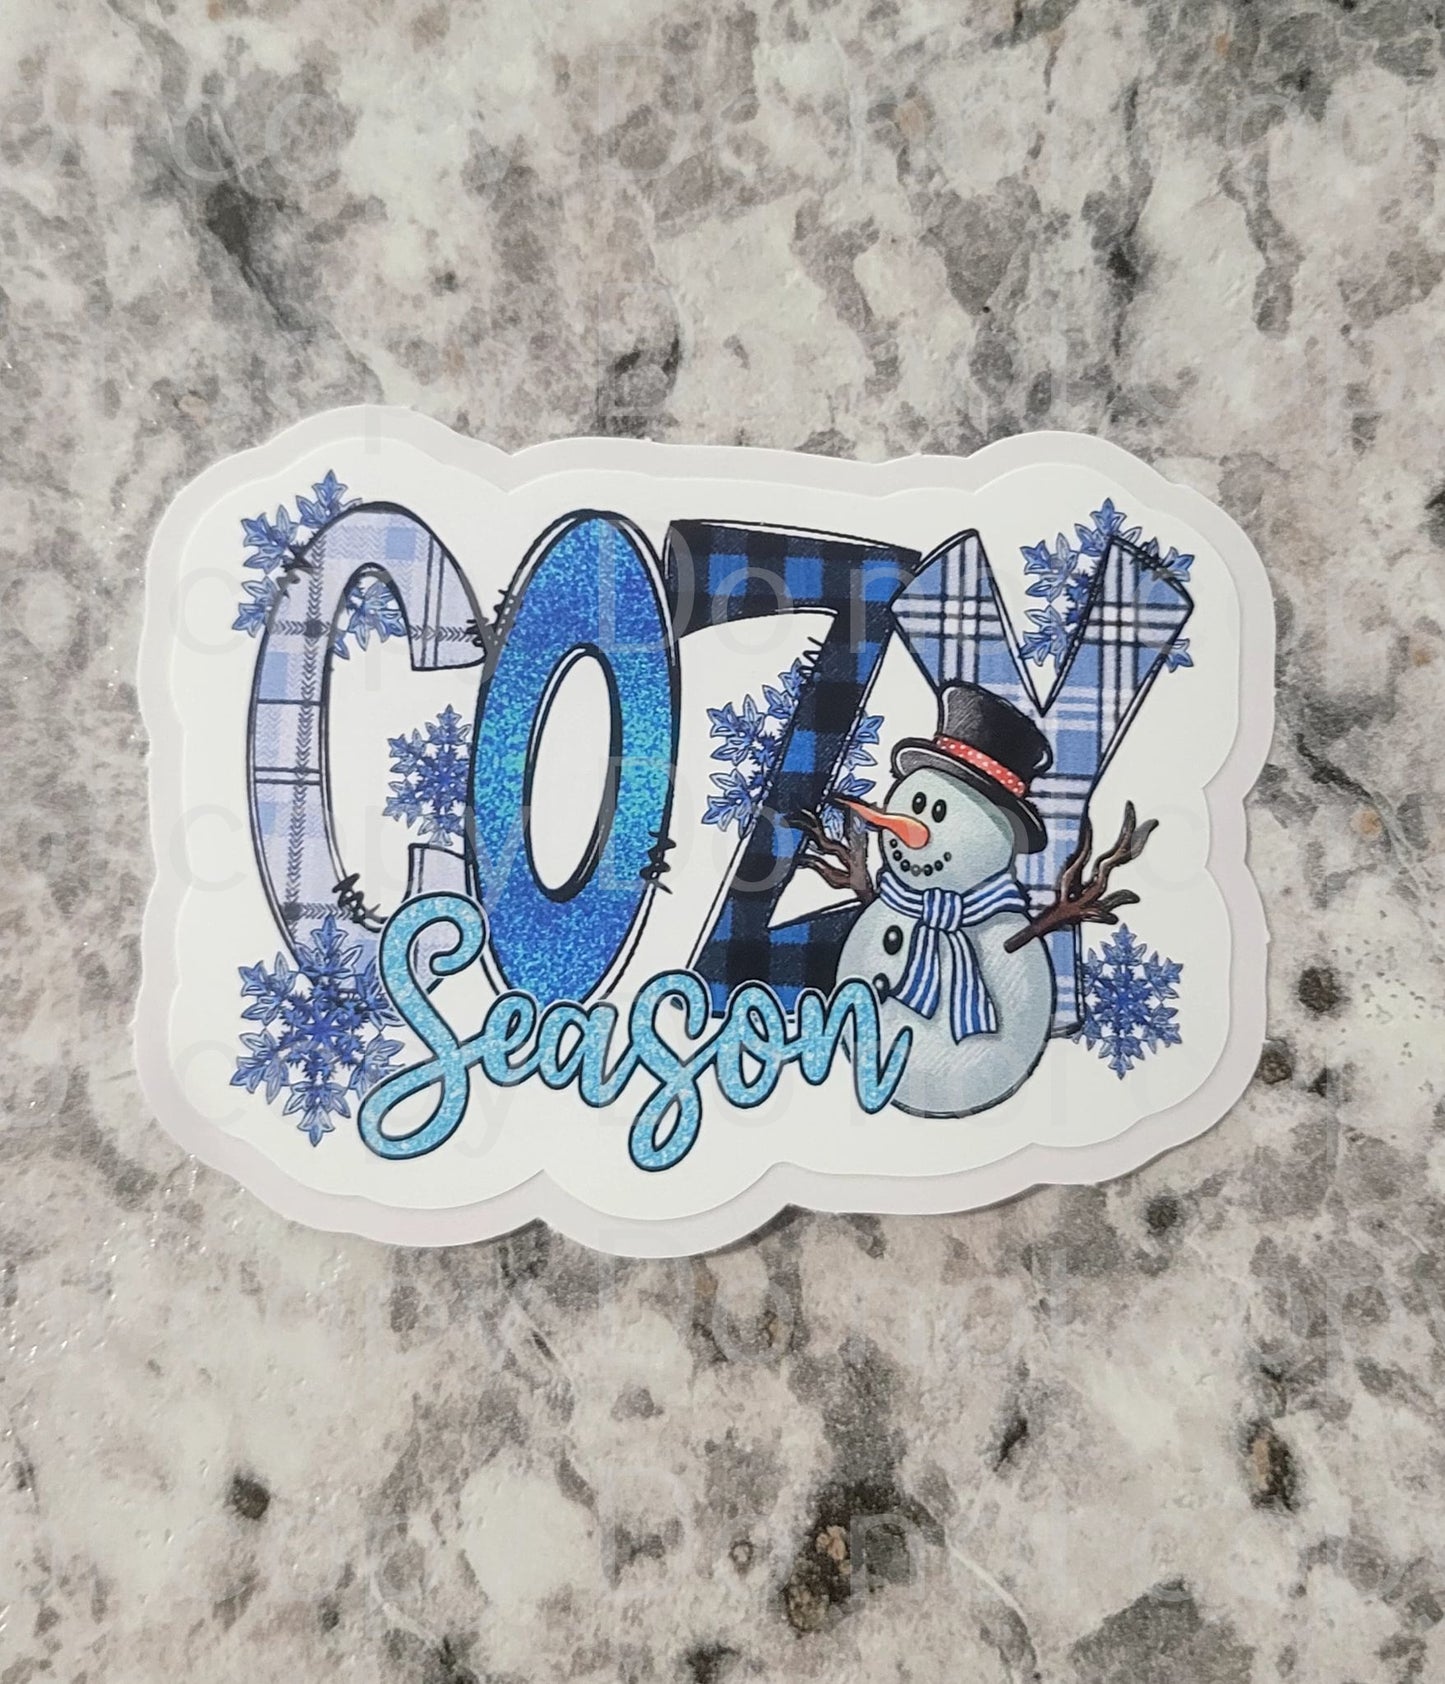 Cozy season snowman Die cut sticker 3-5 Business Day TAT.